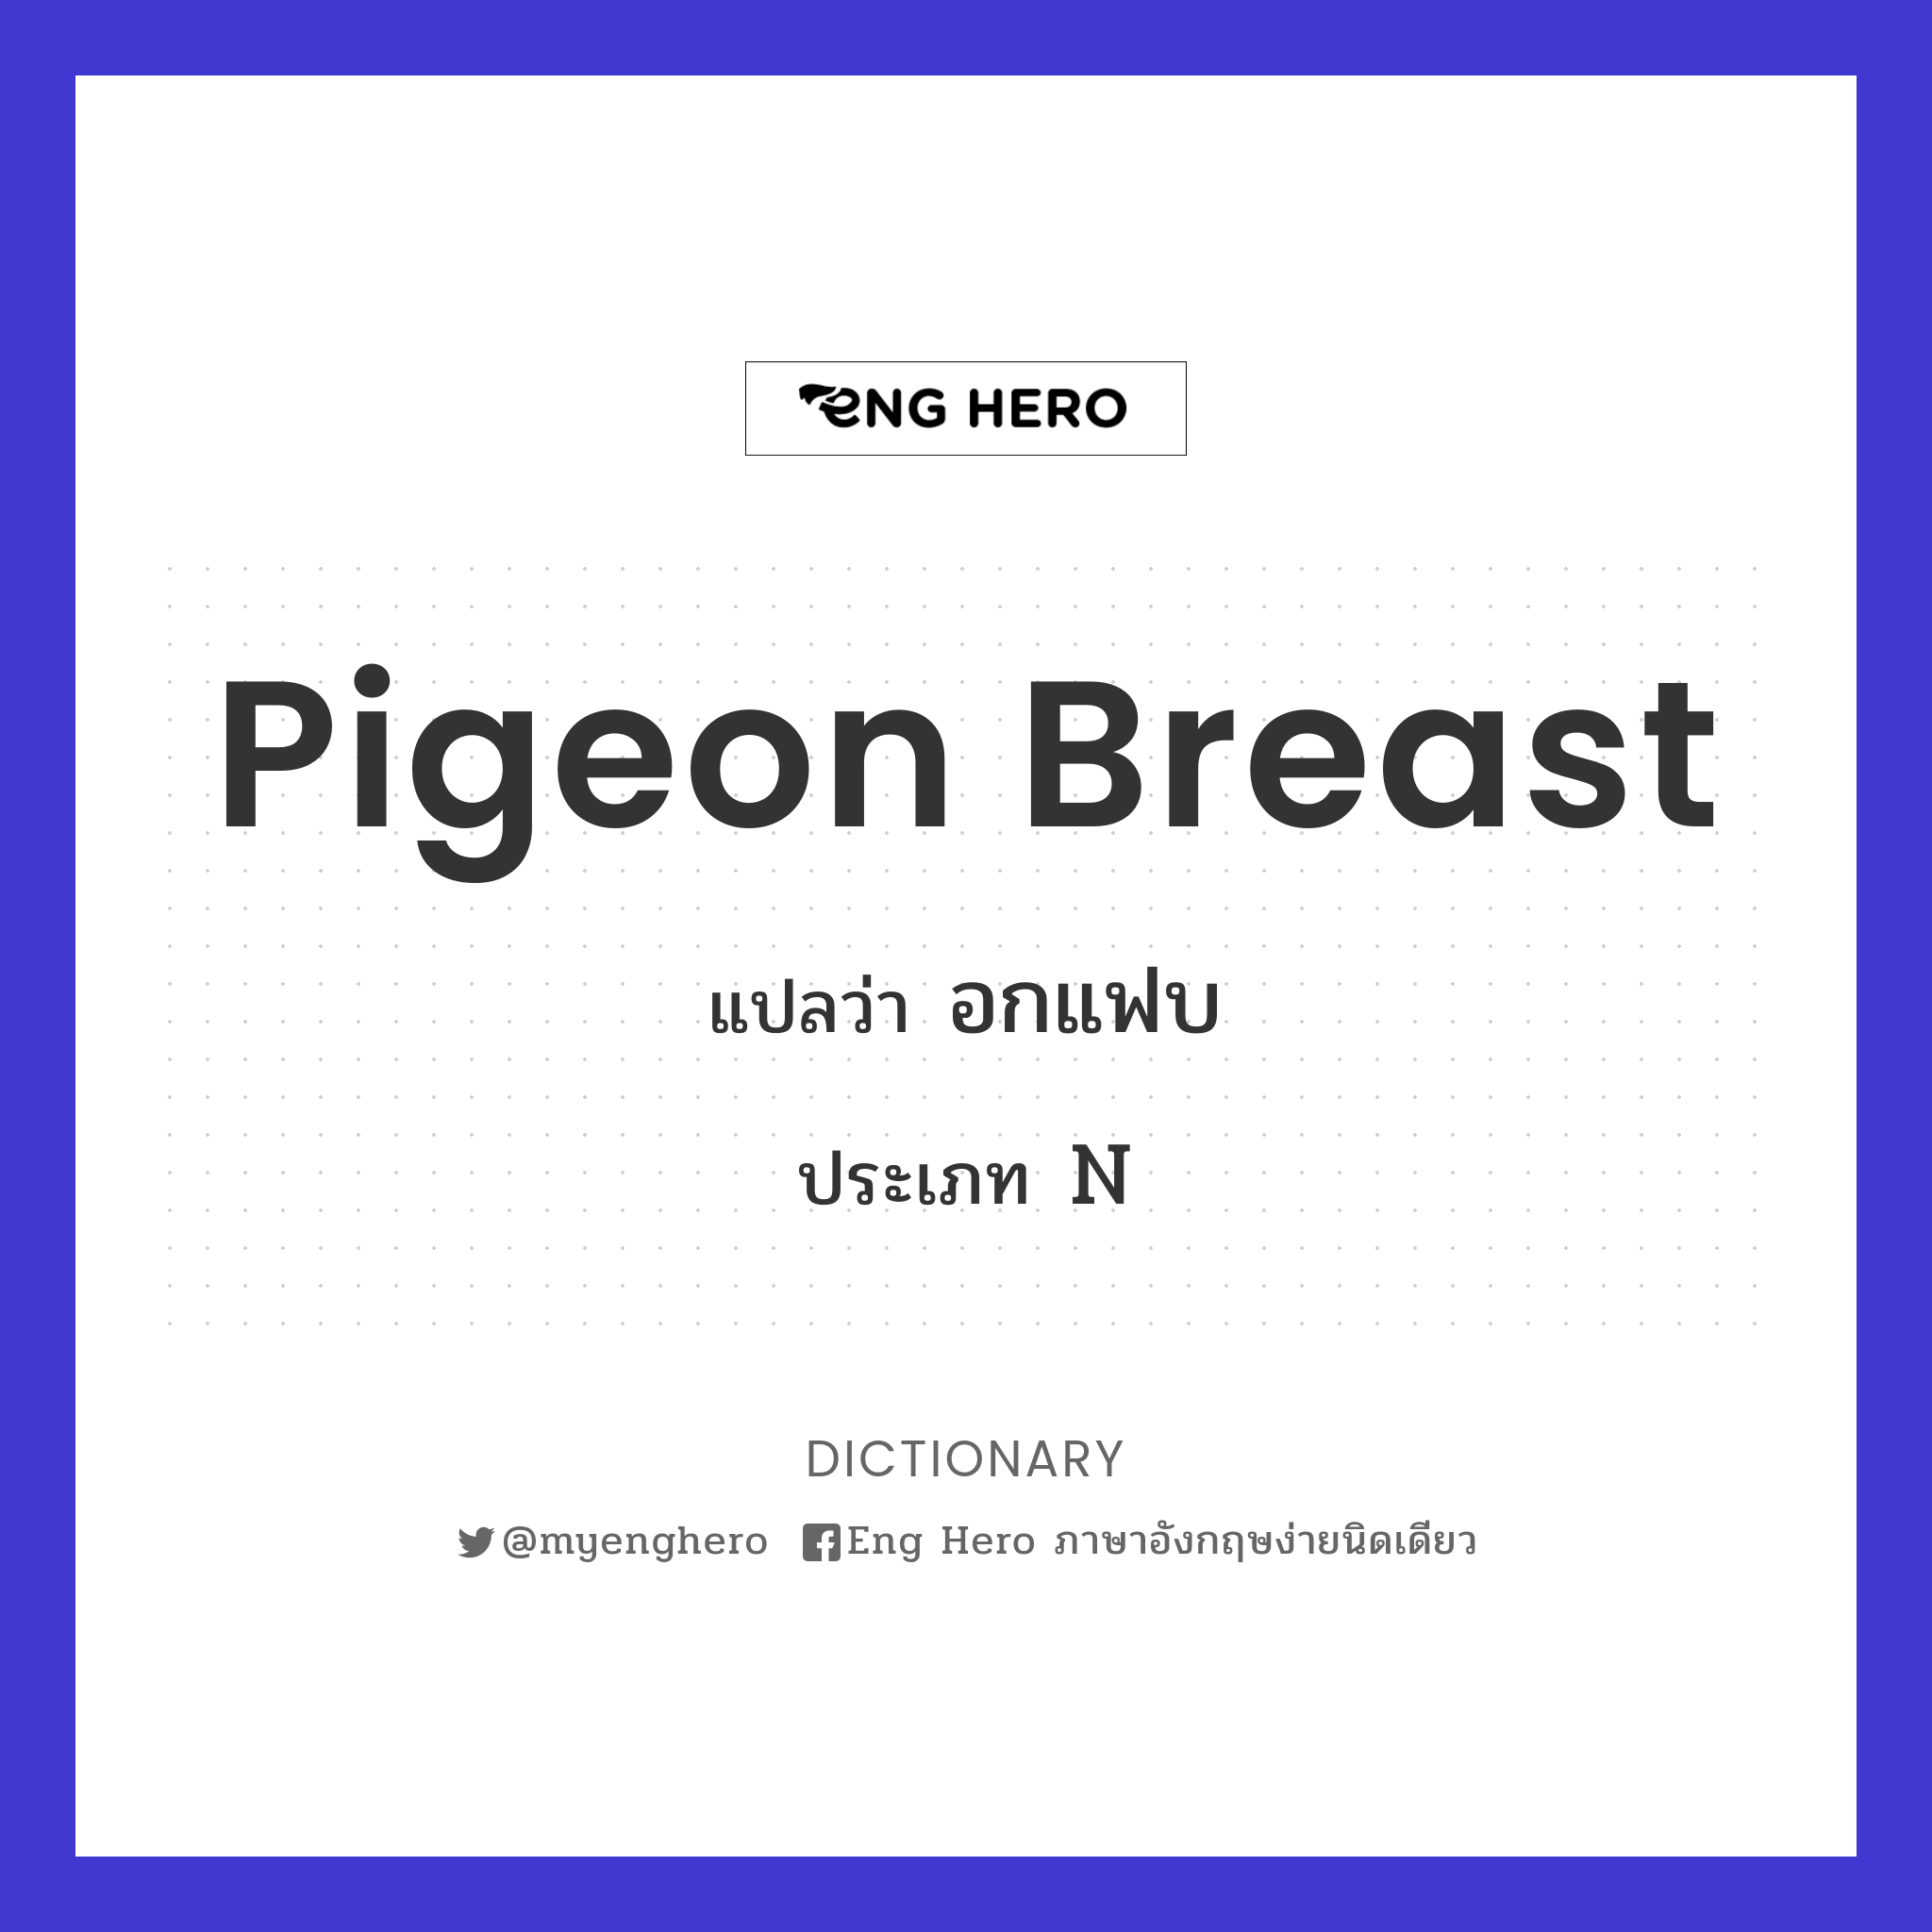 pigeon breast